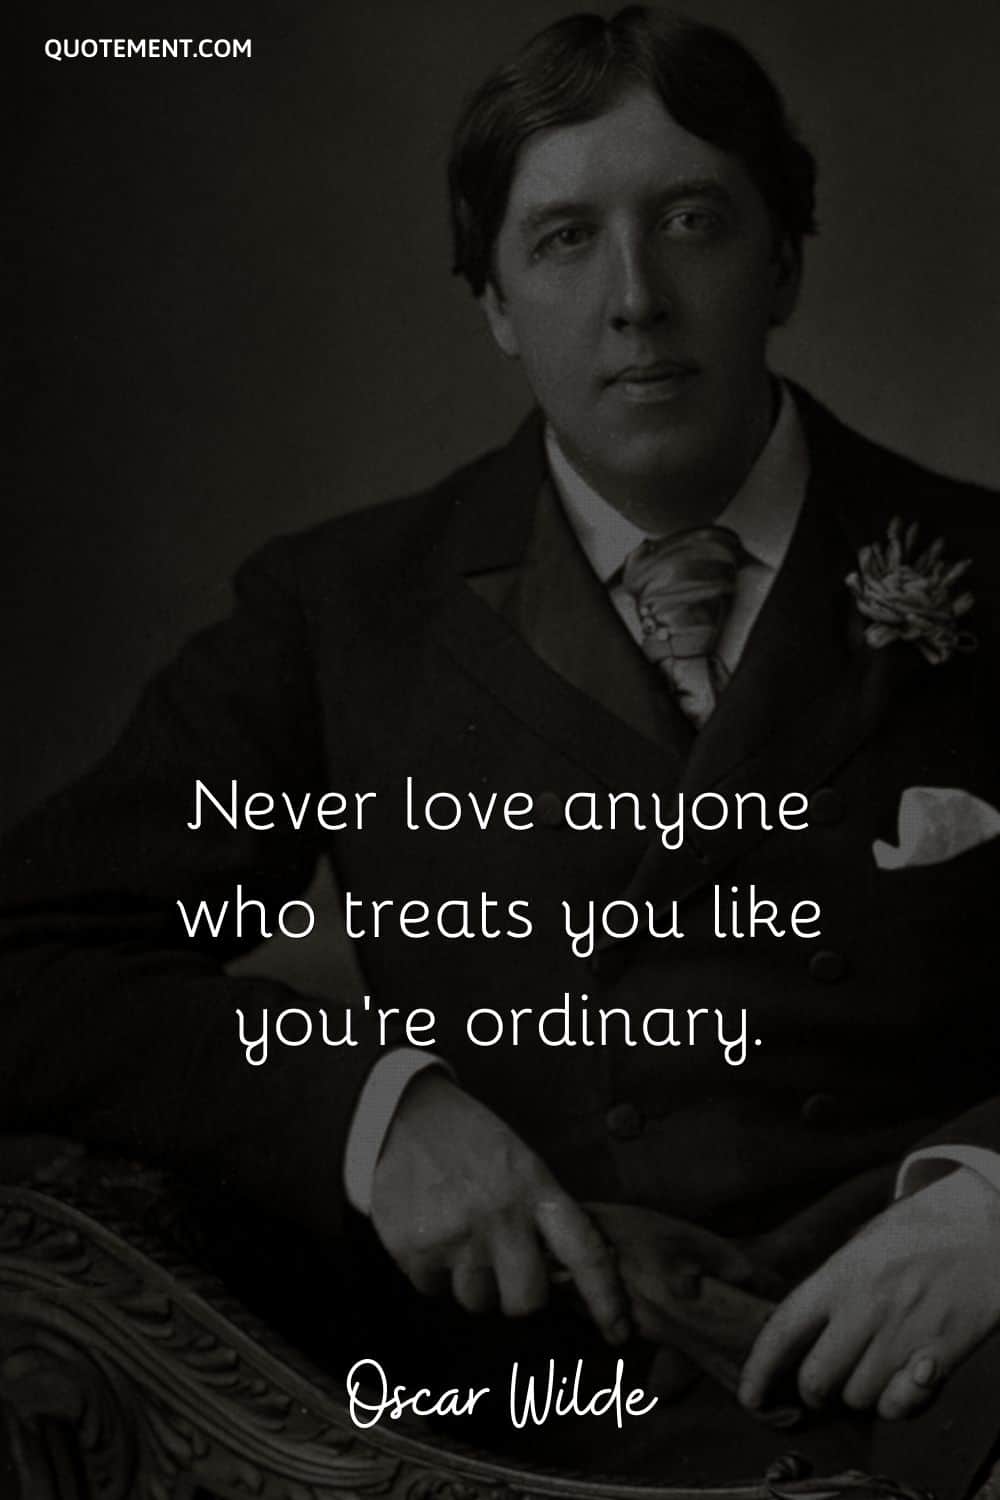 Best Oscar Wilde love quote and Oscar's portrait.